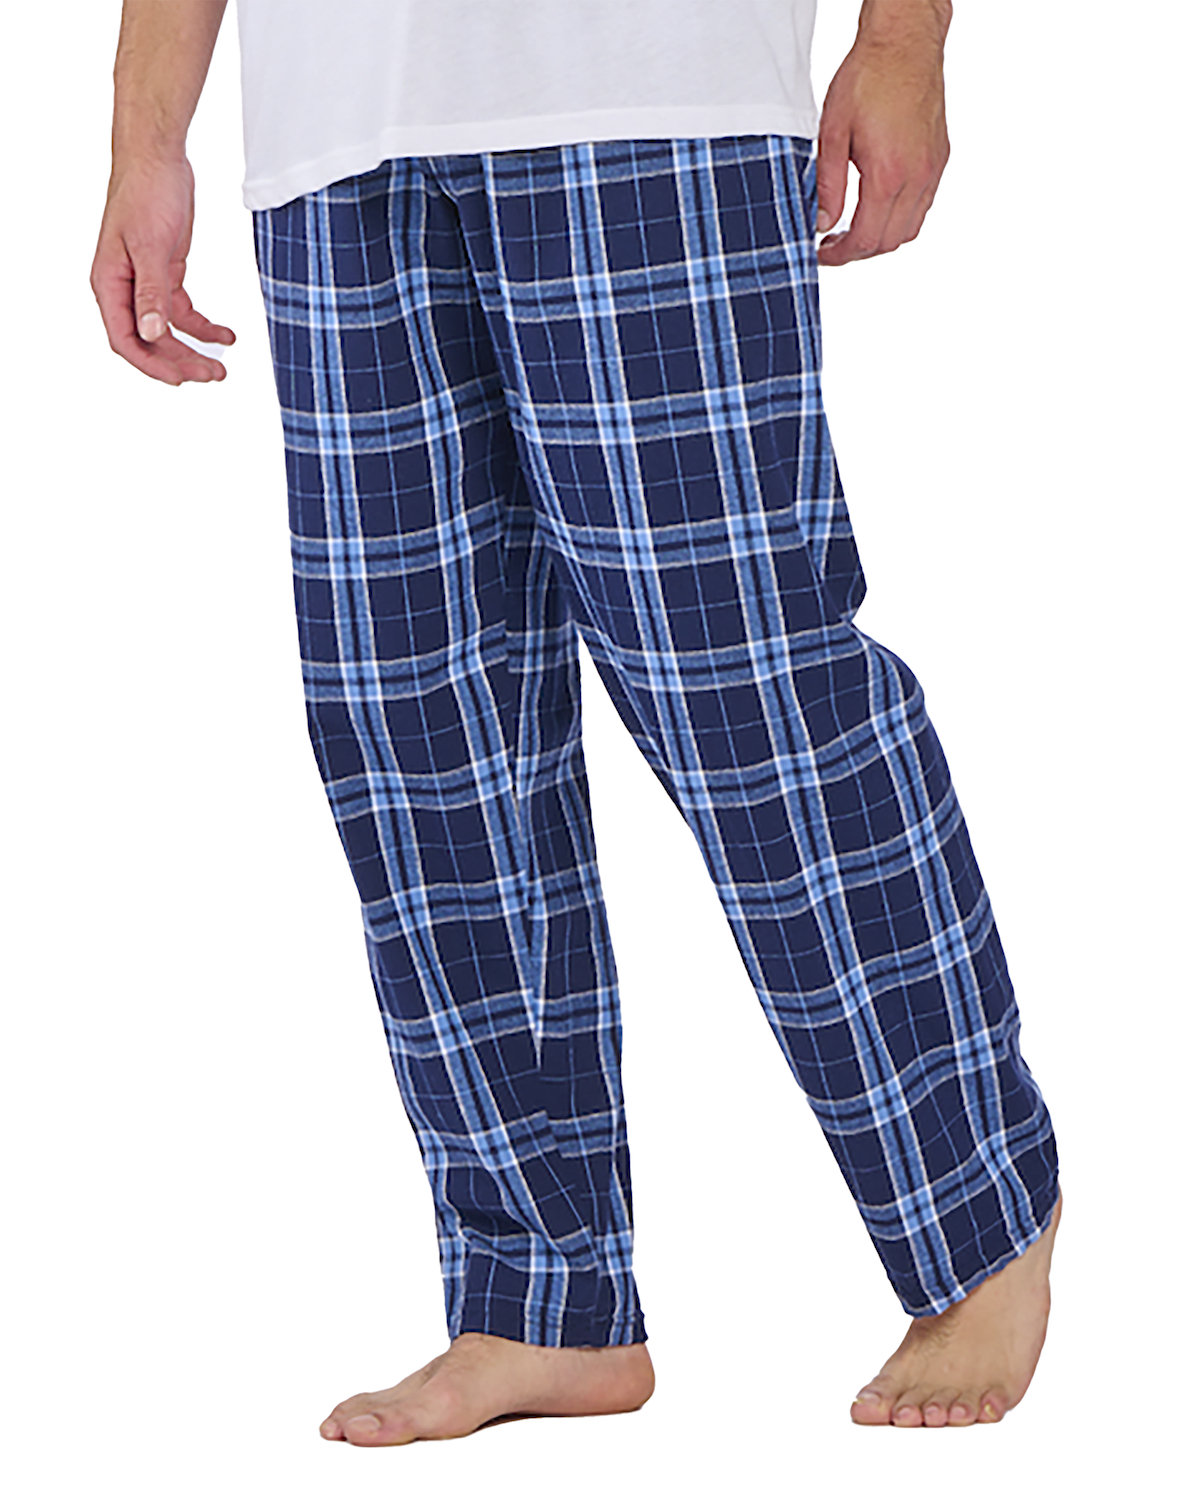 Mens Blue Plaid Flannel Jogger Sleep Pants Pajama Bottoms